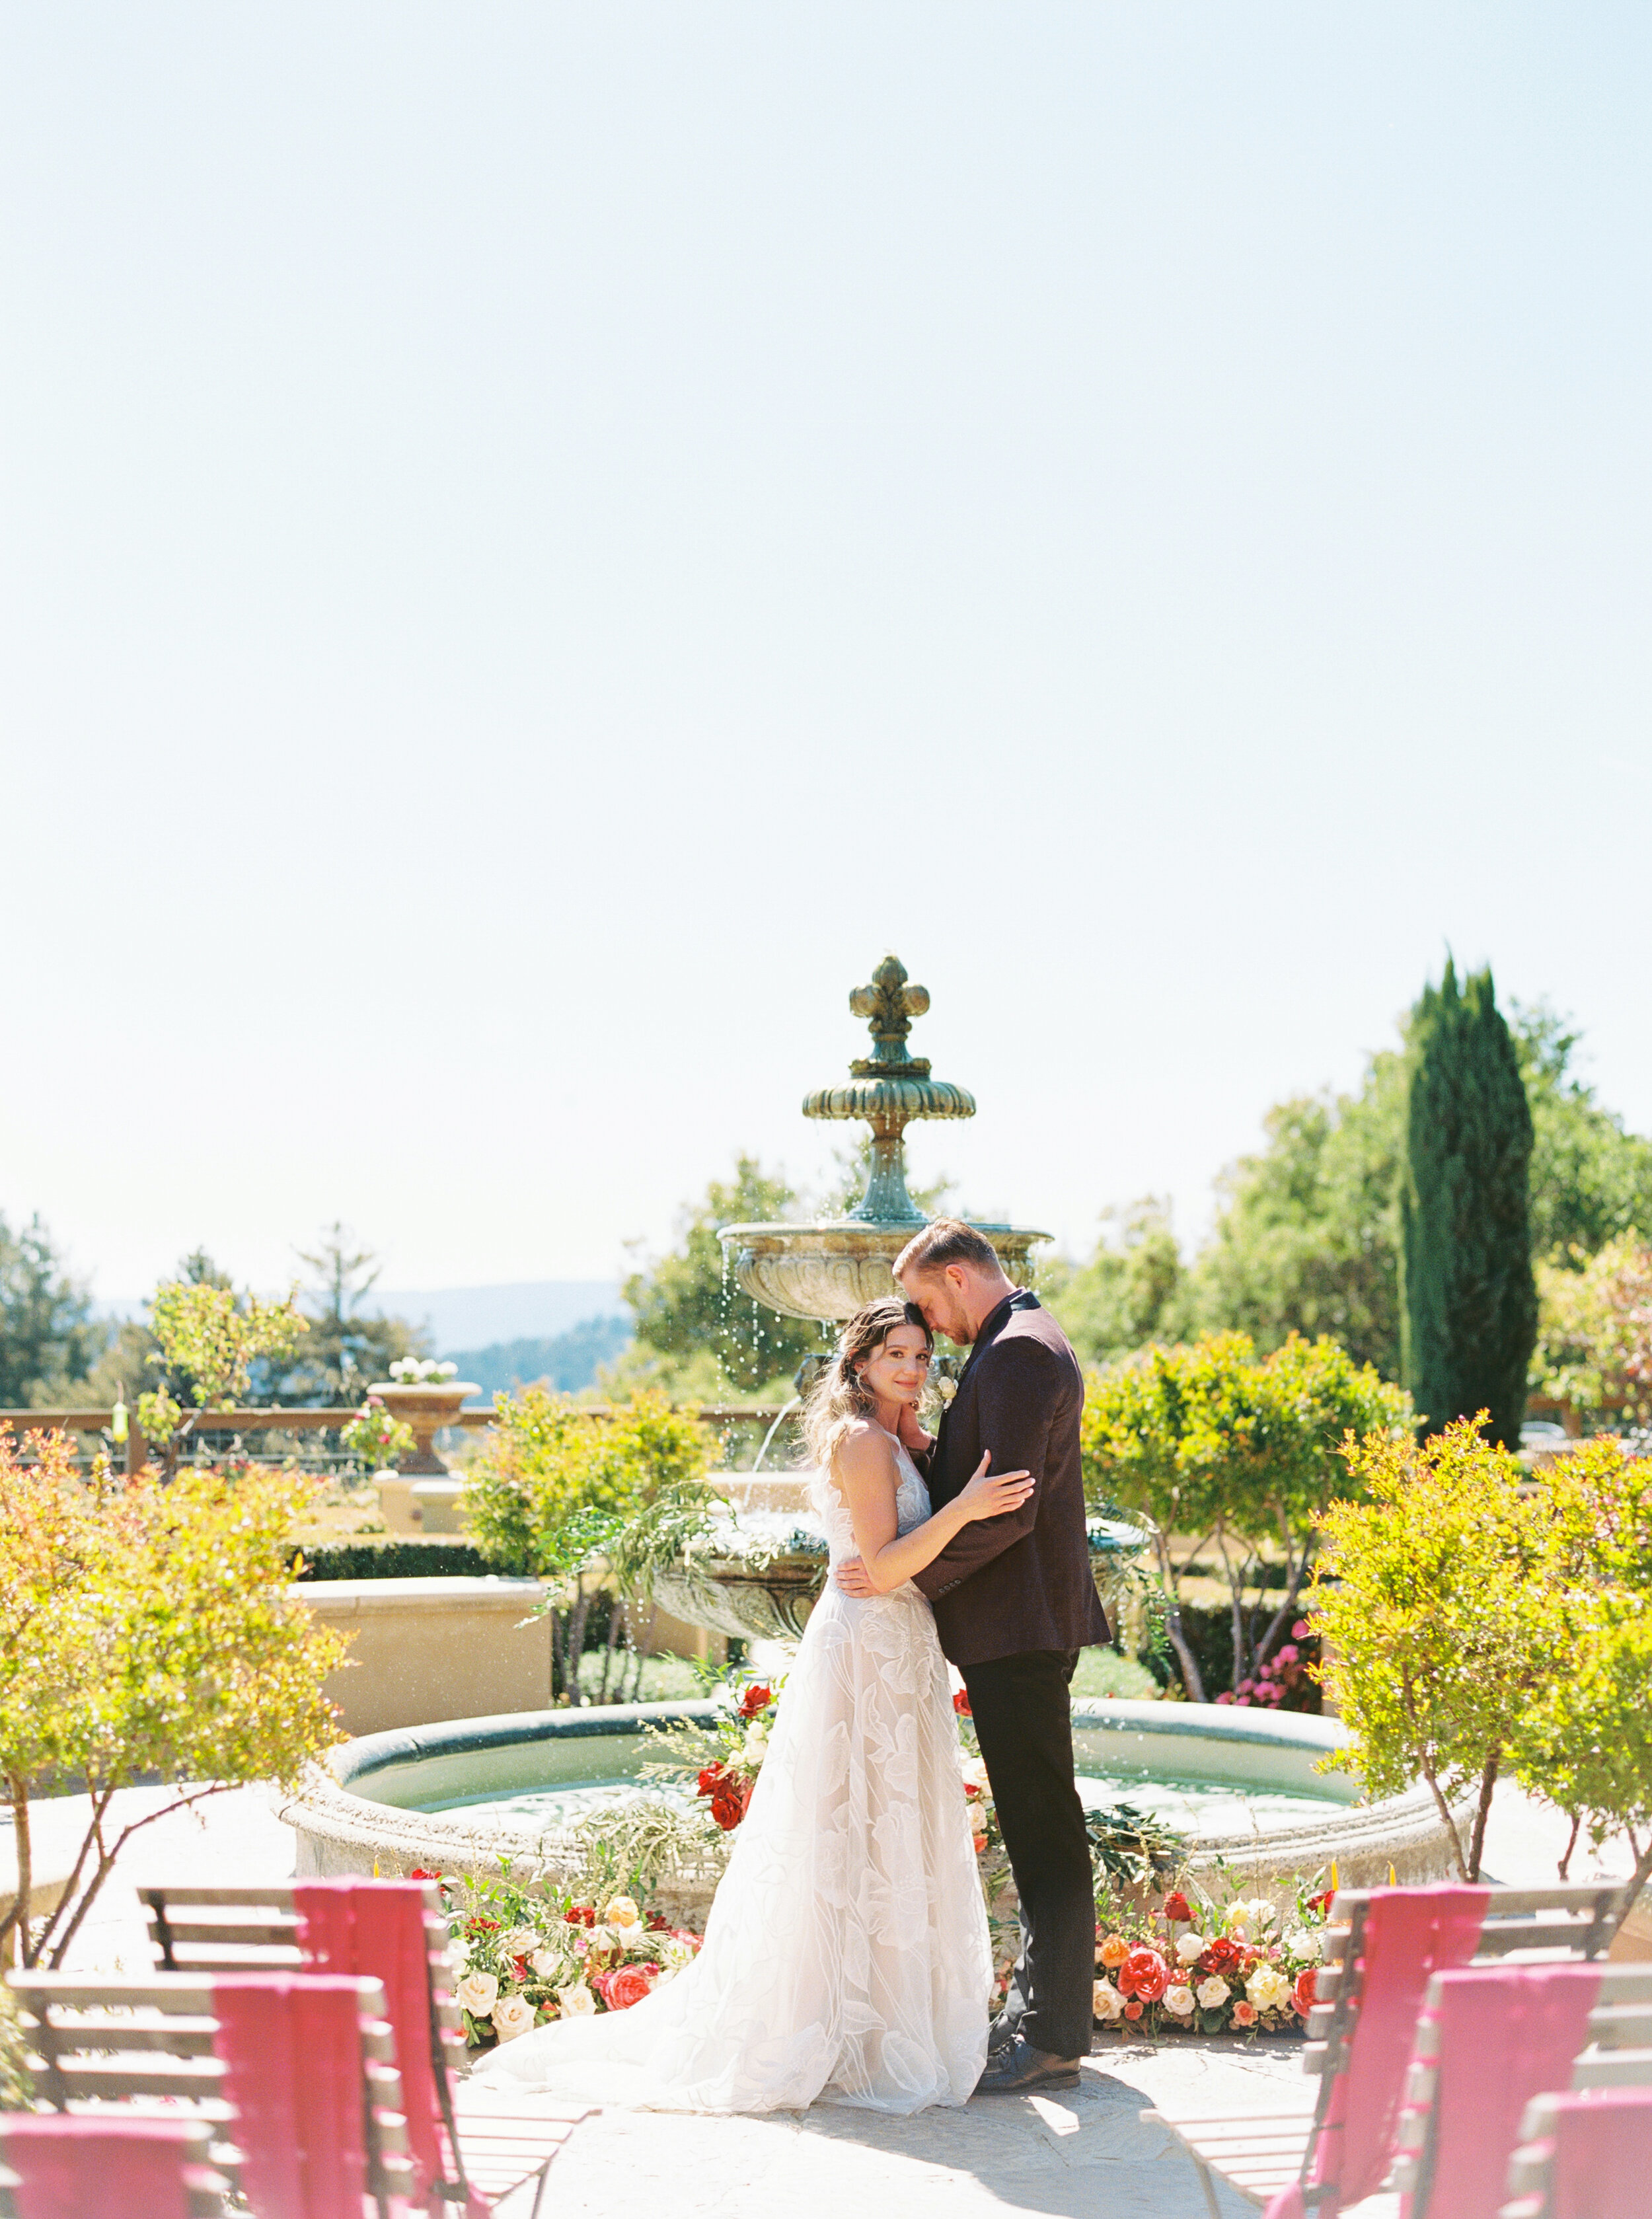 Regale Winery and Vineyards Wedding - Sarahi Hadden Photography-464.jpg